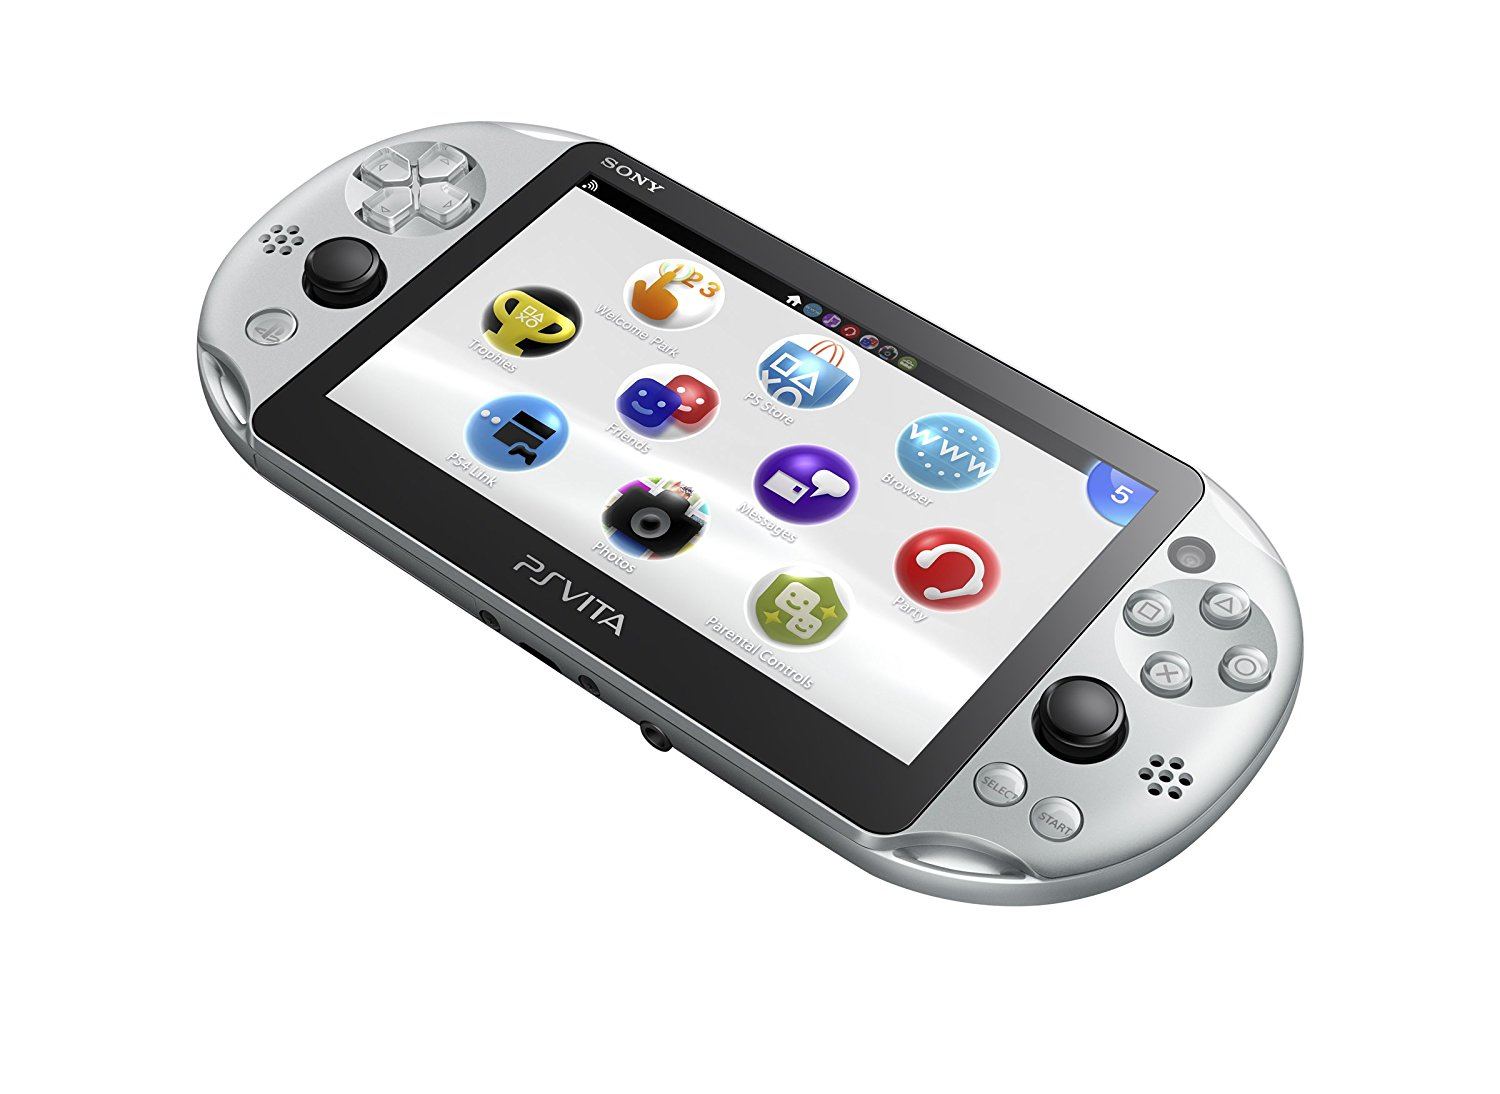 PlayStation Vita - Wi-Fi Model (Silver)